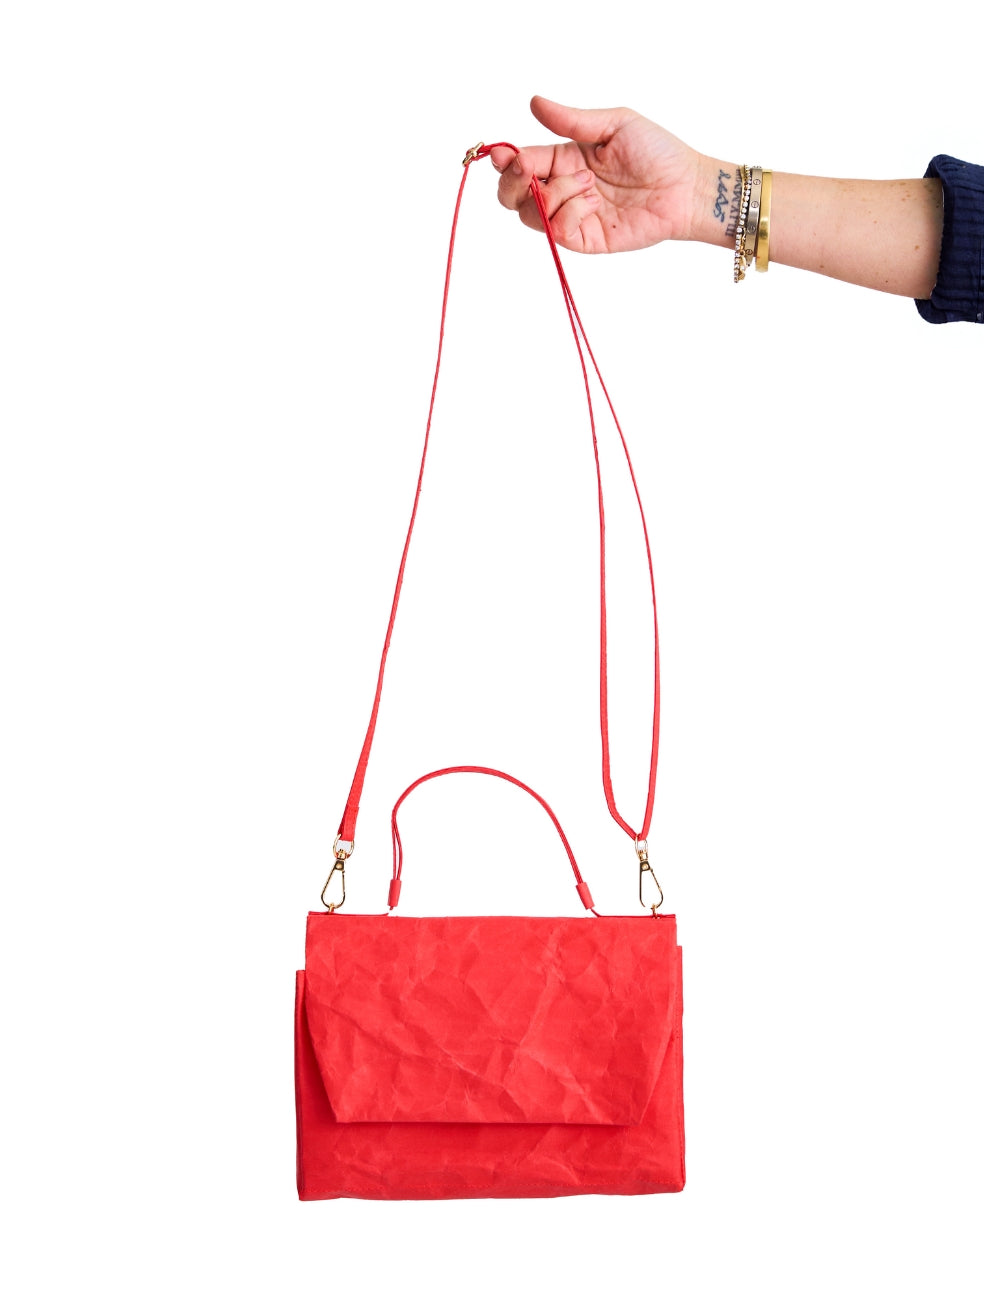 Paper purse stylish bright red tart vegan fashion made in canada